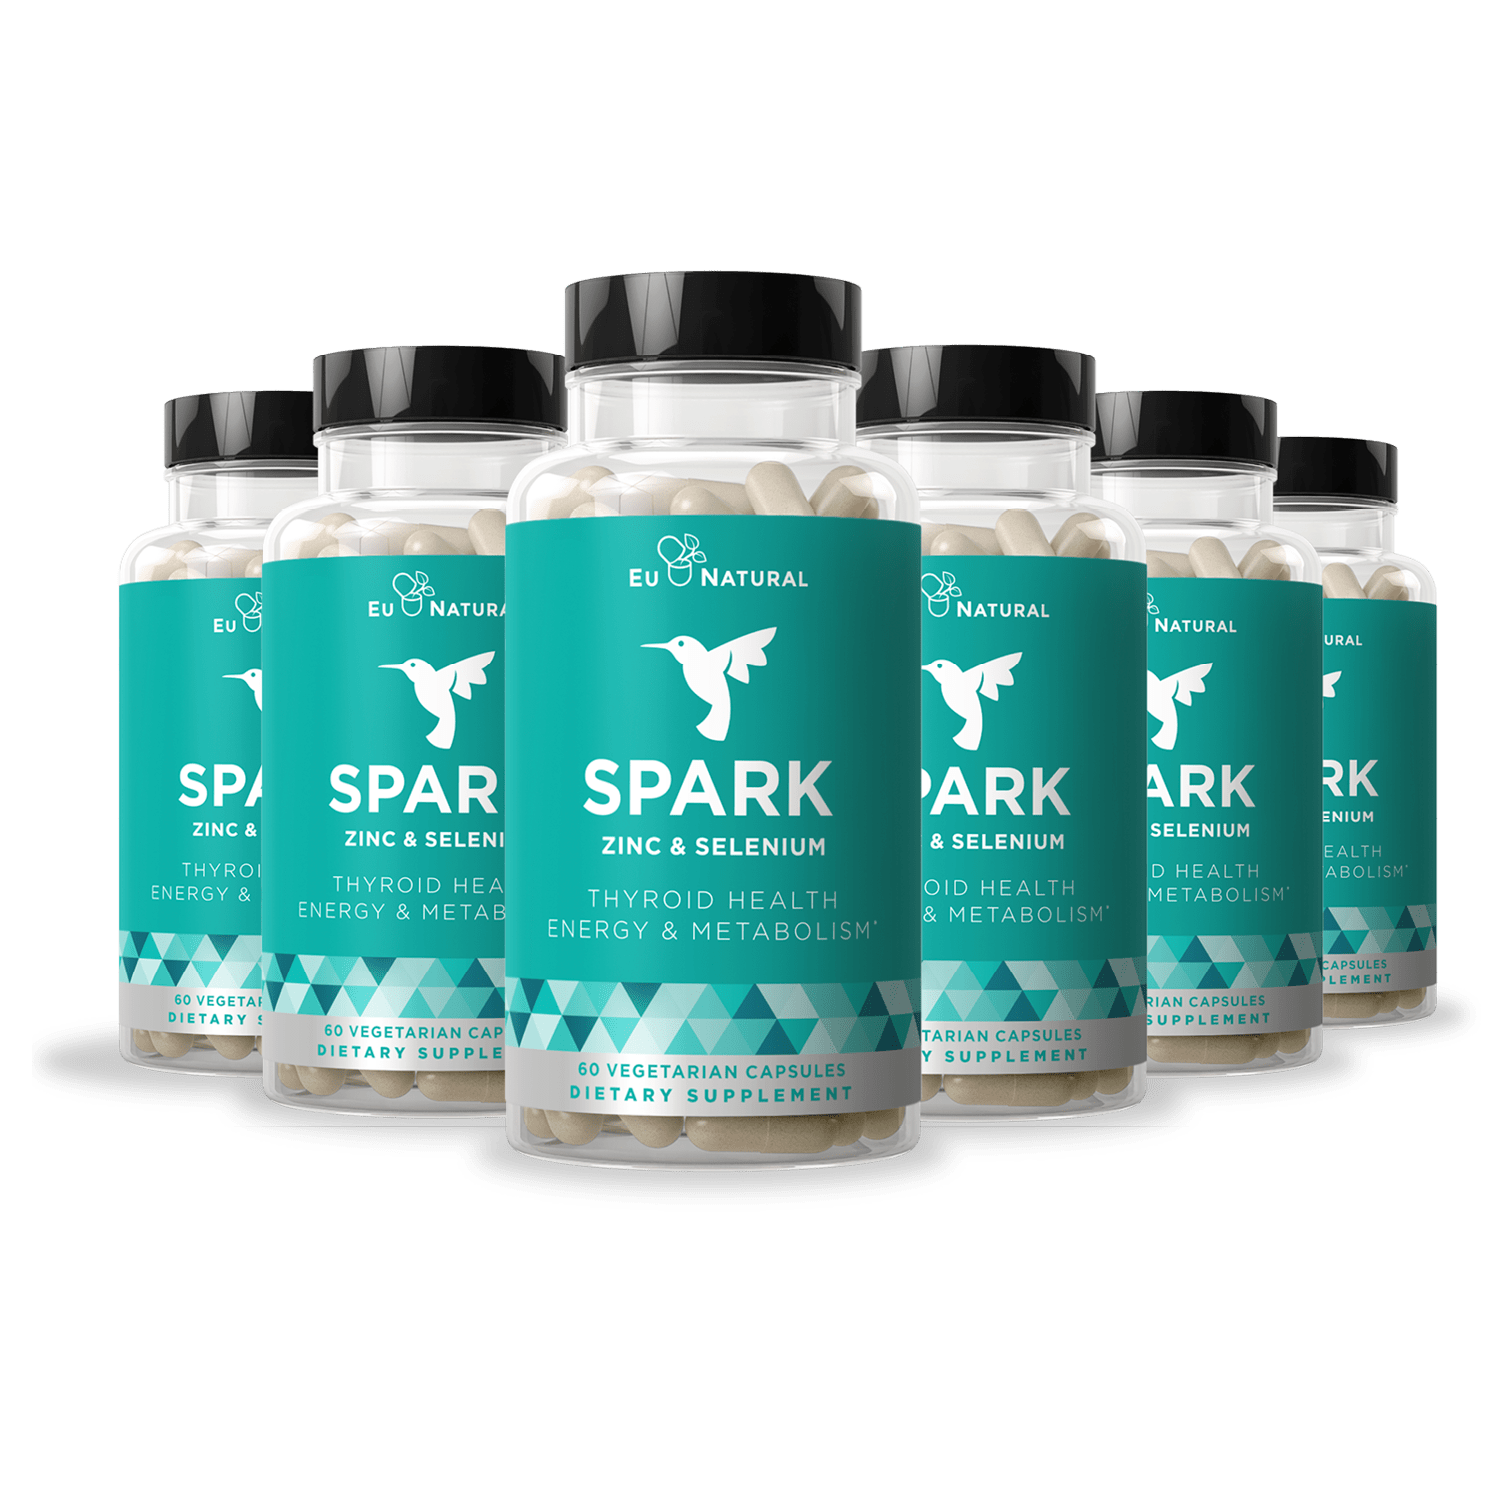 Eu Natural SPARK Thyroid Support & Energy Metabolism (6 Pack)